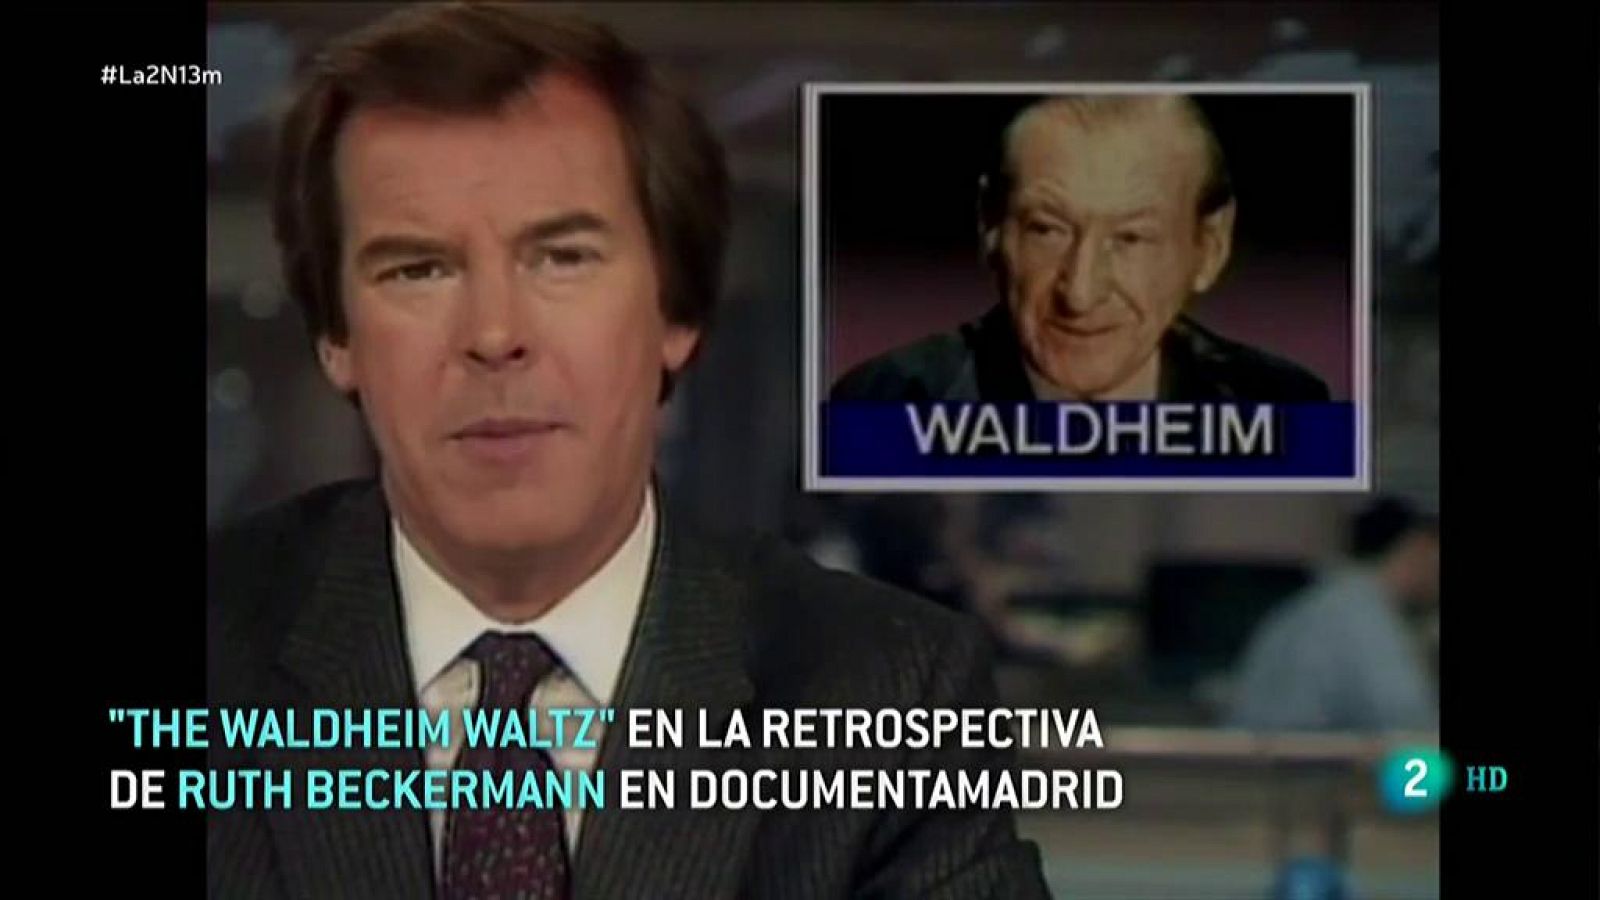 La 2 Noticias: "El caso Kurt Waldheim" en DocumentaMadrid | RTVE Play